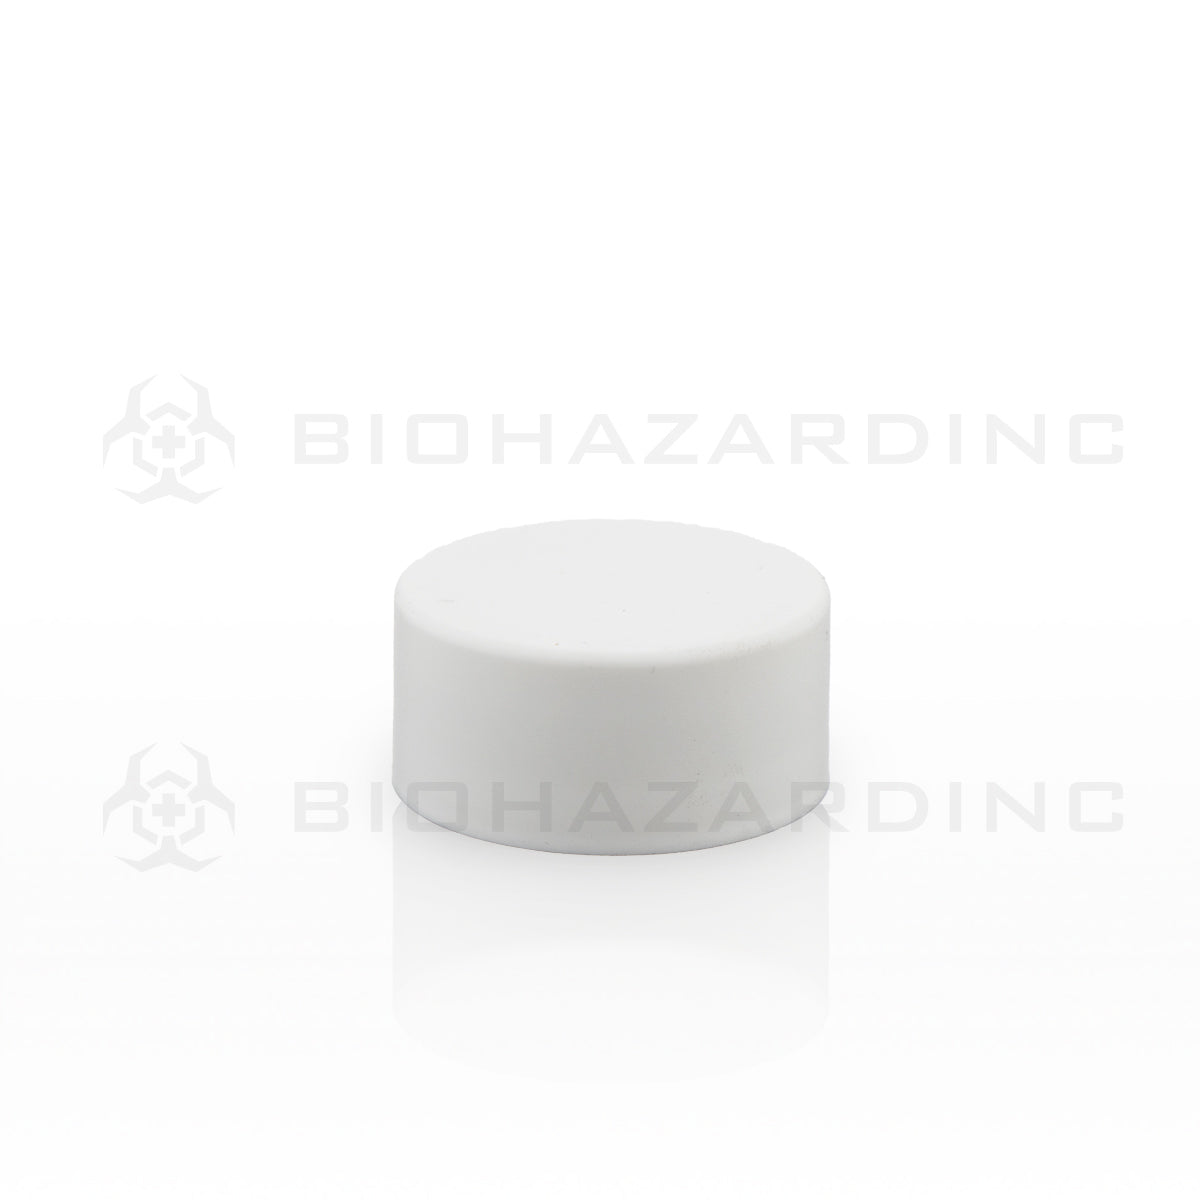 Child Resistant | Plastic Caps | 28mm - Matte White - 126 Count Child Resistant Cap Biohazard Inc   